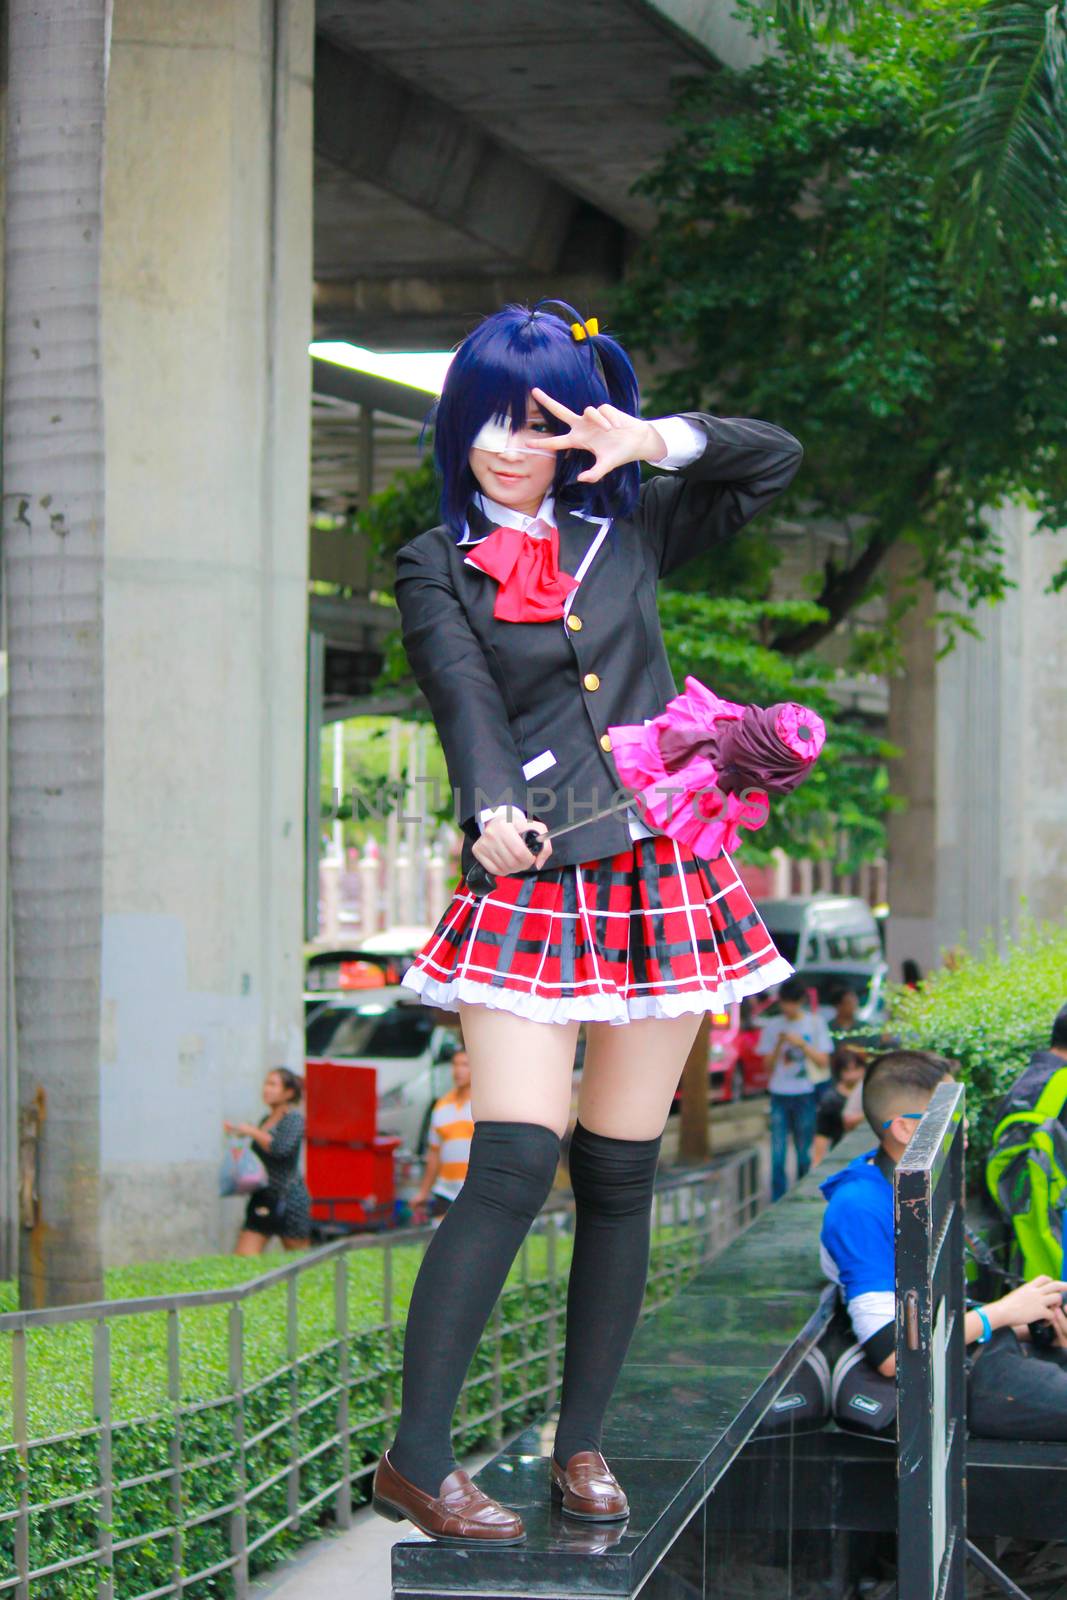 Bangkok - Aug 31: An unidentified Japanese anime cosplay Takanashi Rikka pose  on August 31, 2014 at Central World, Bangkok, Thailand.